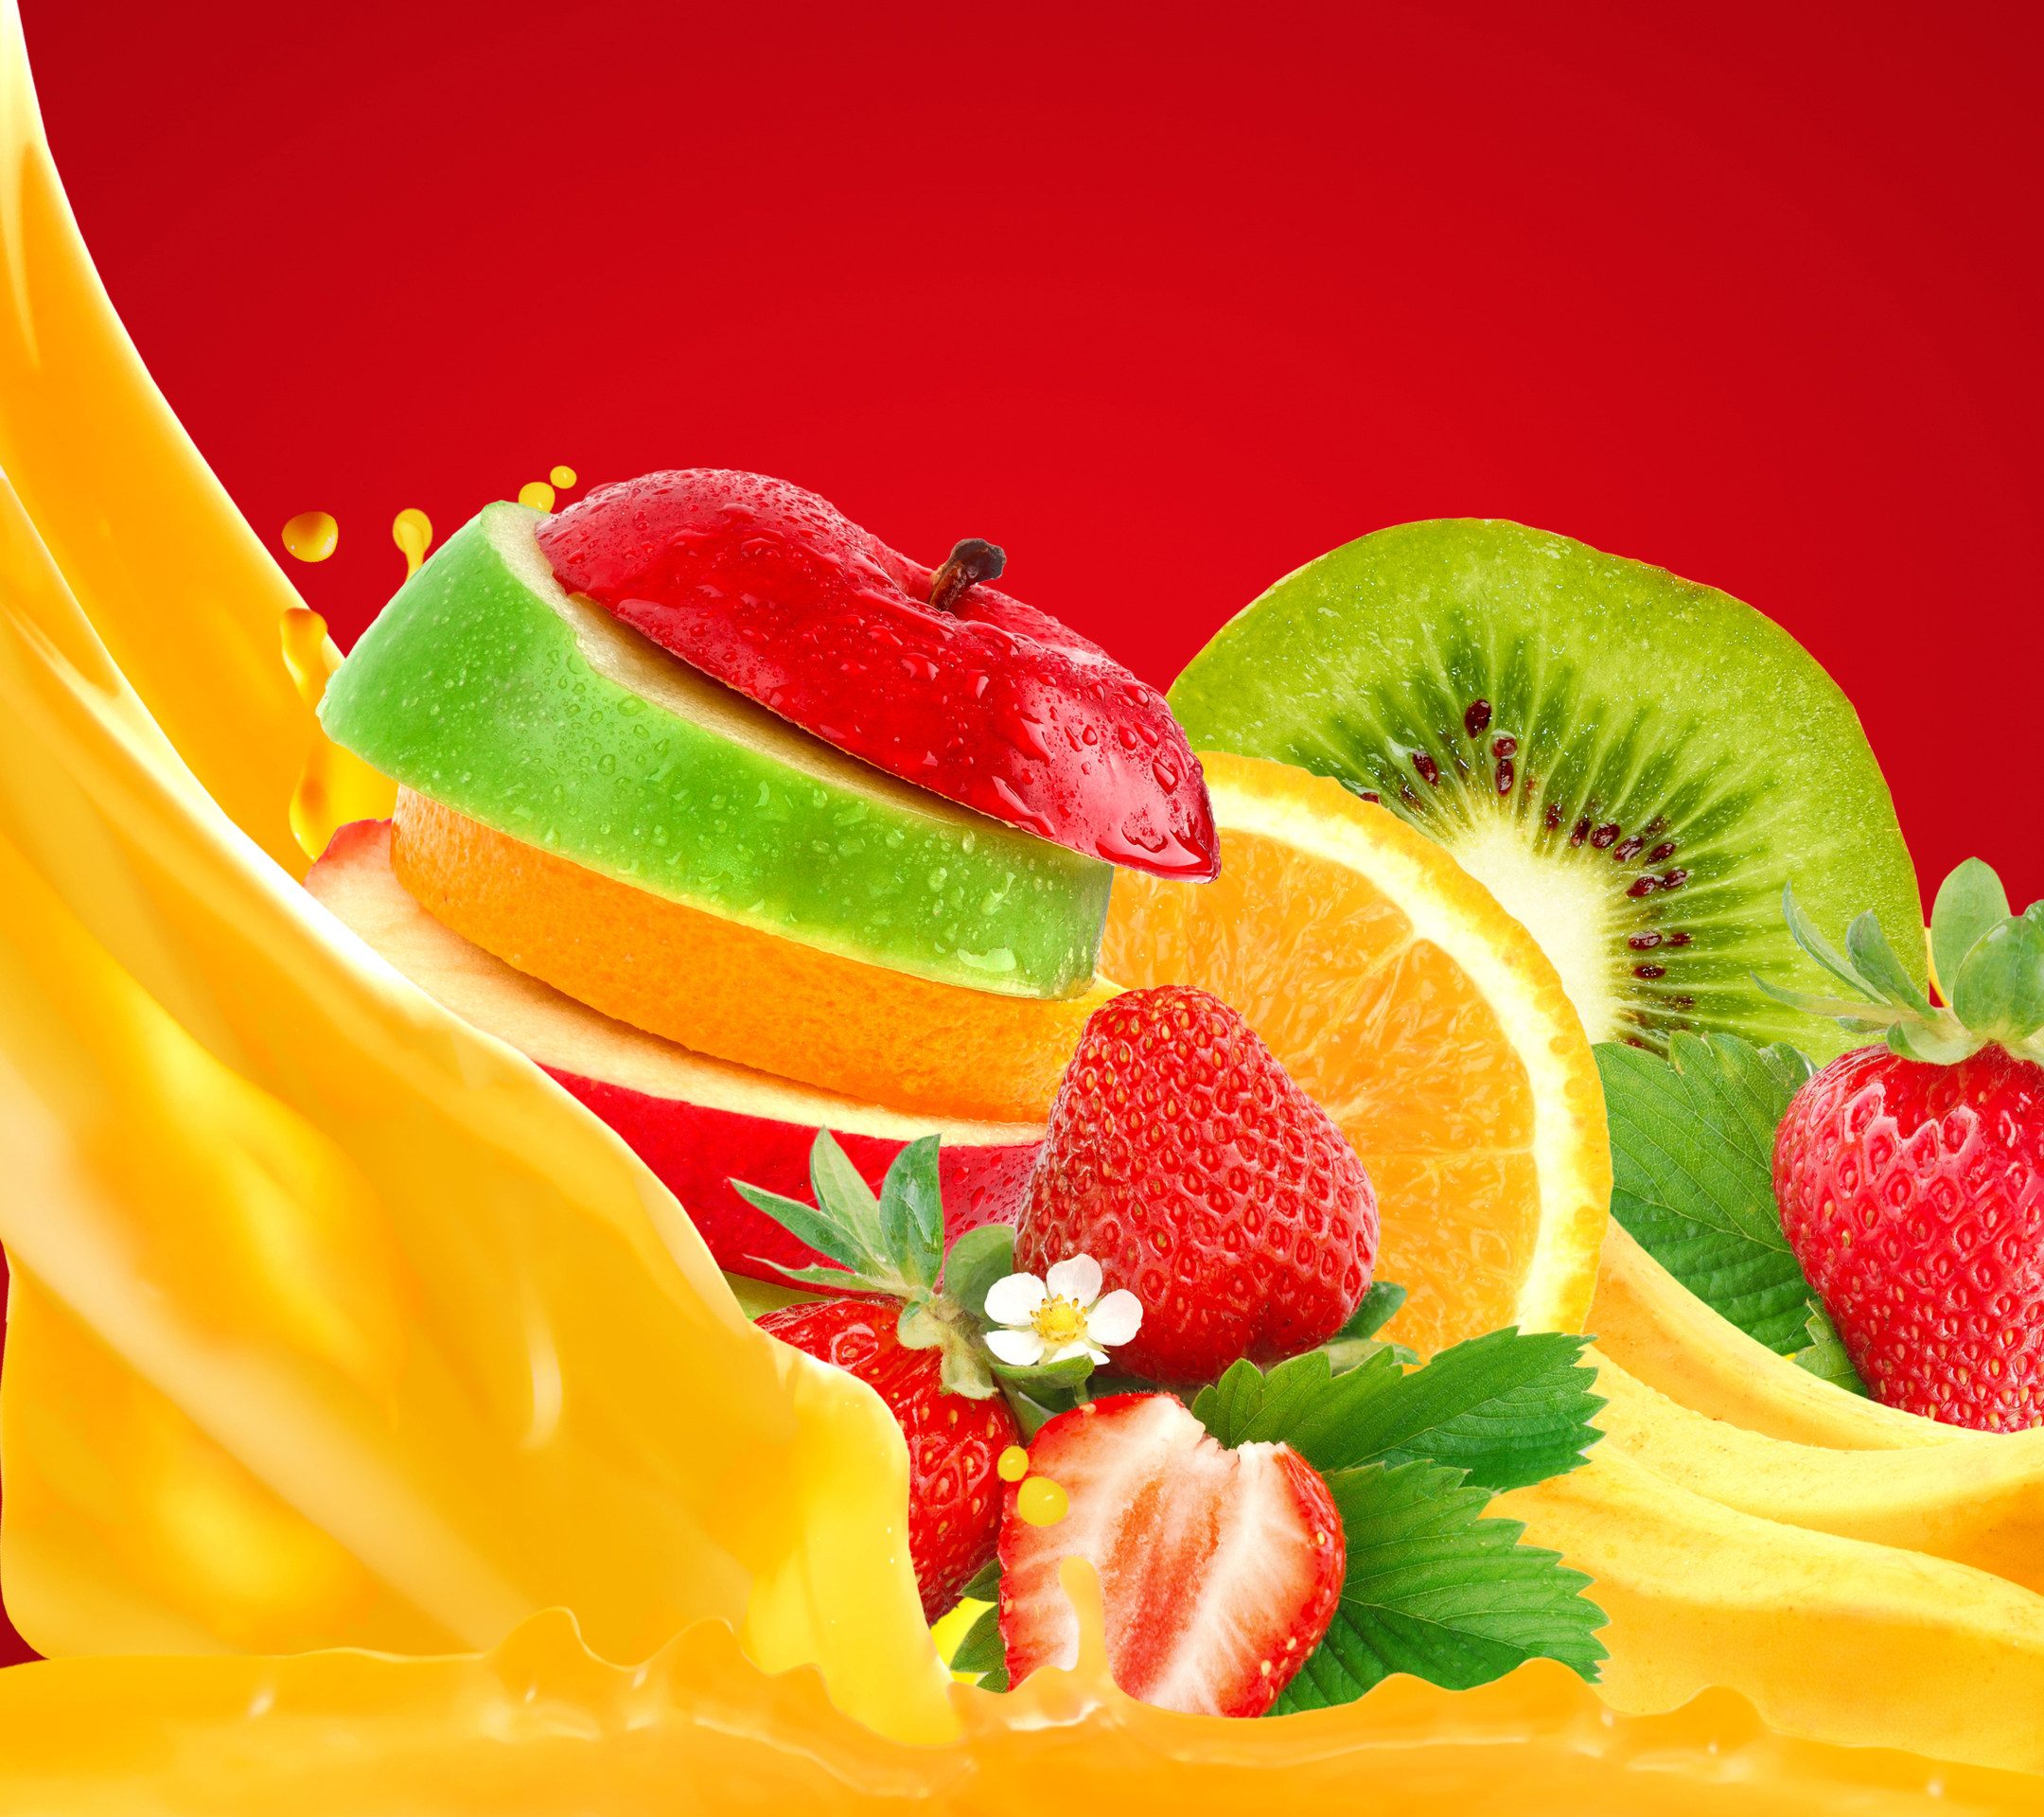 Descarga gratis la imagen Frutas, Fresa, Manzana, Kiwi, Fruta, Alimento, Naranja) en el escritorio de tu PC